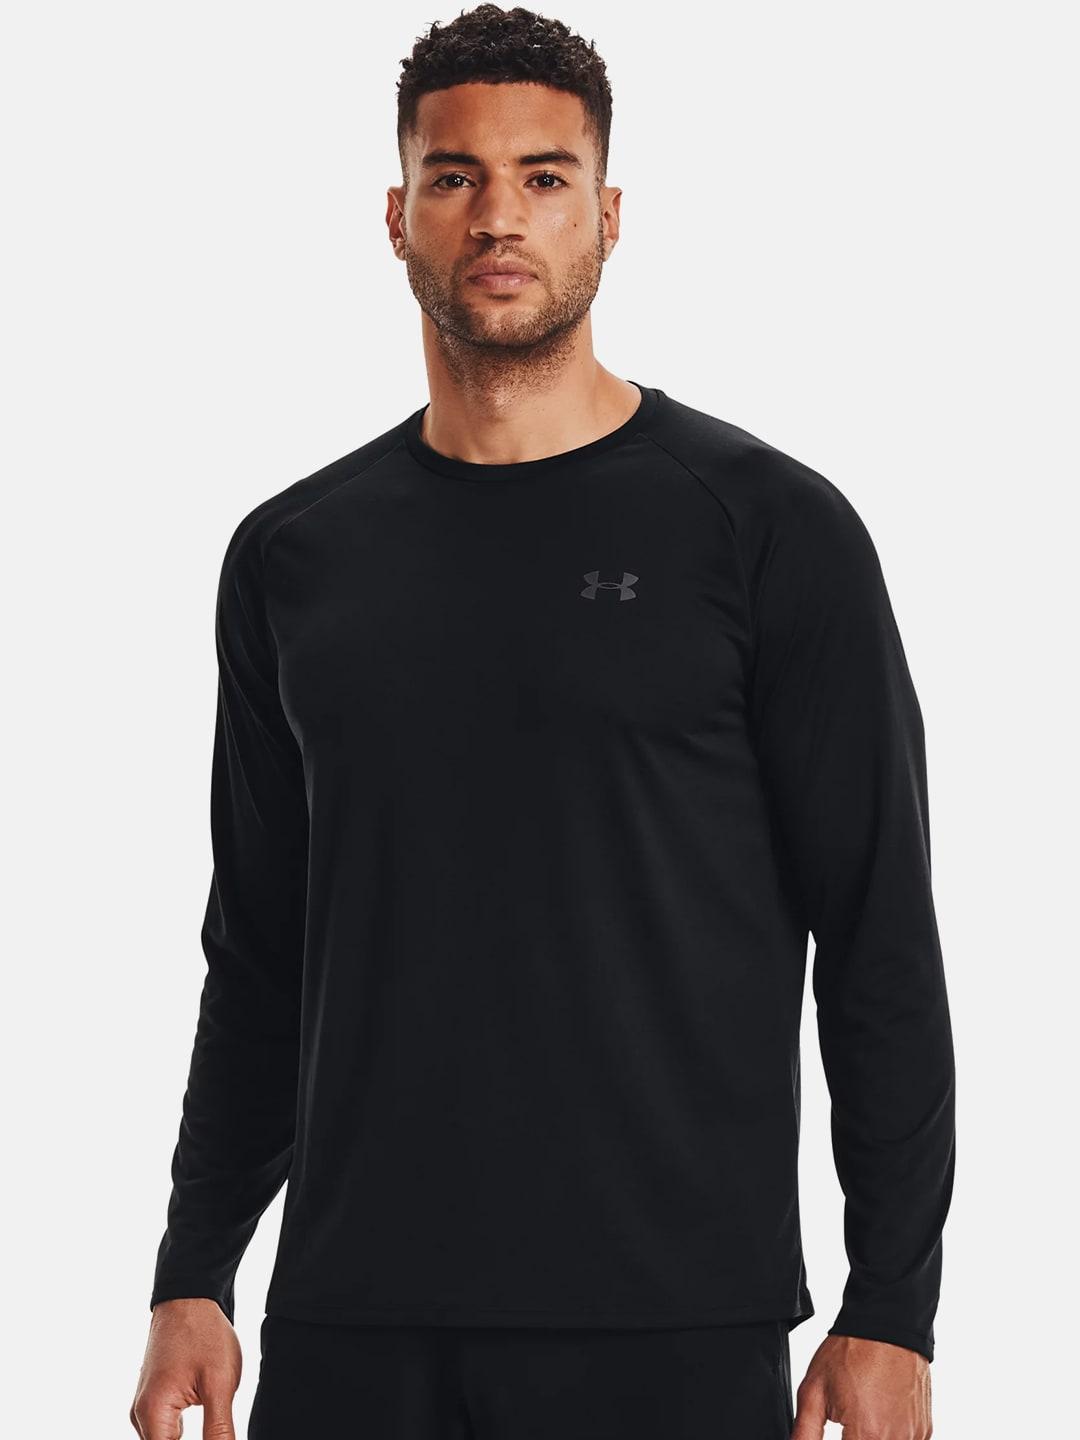 under-armour-men-black-training-or-gym-tech-long-sleeve-tshirt